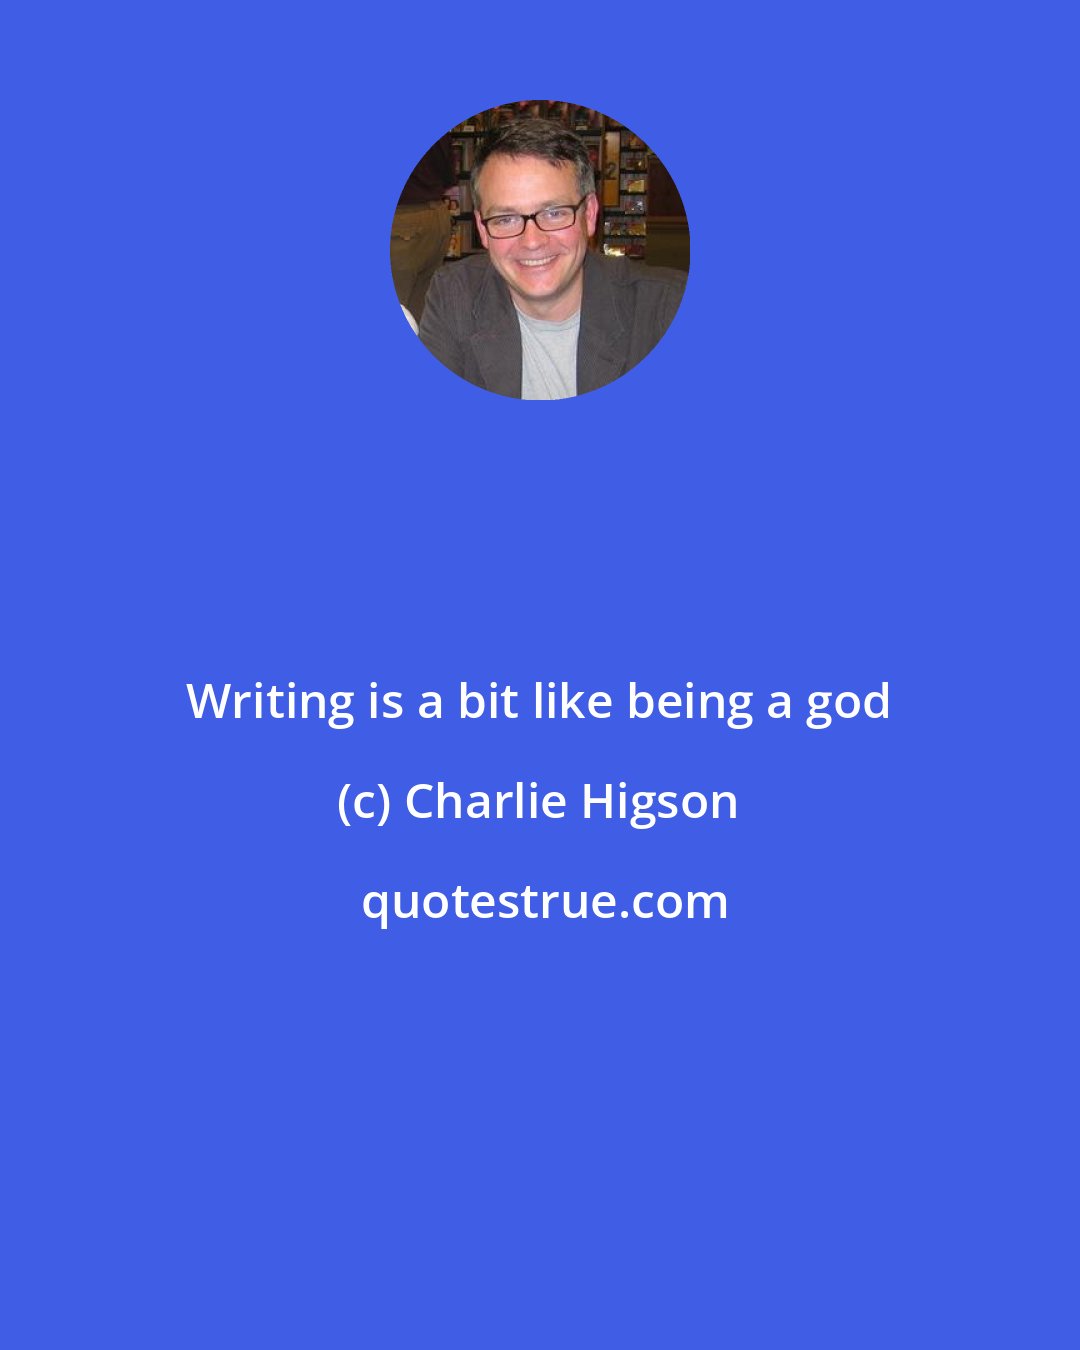 Charlie Higson: Writing is a bit like being a god